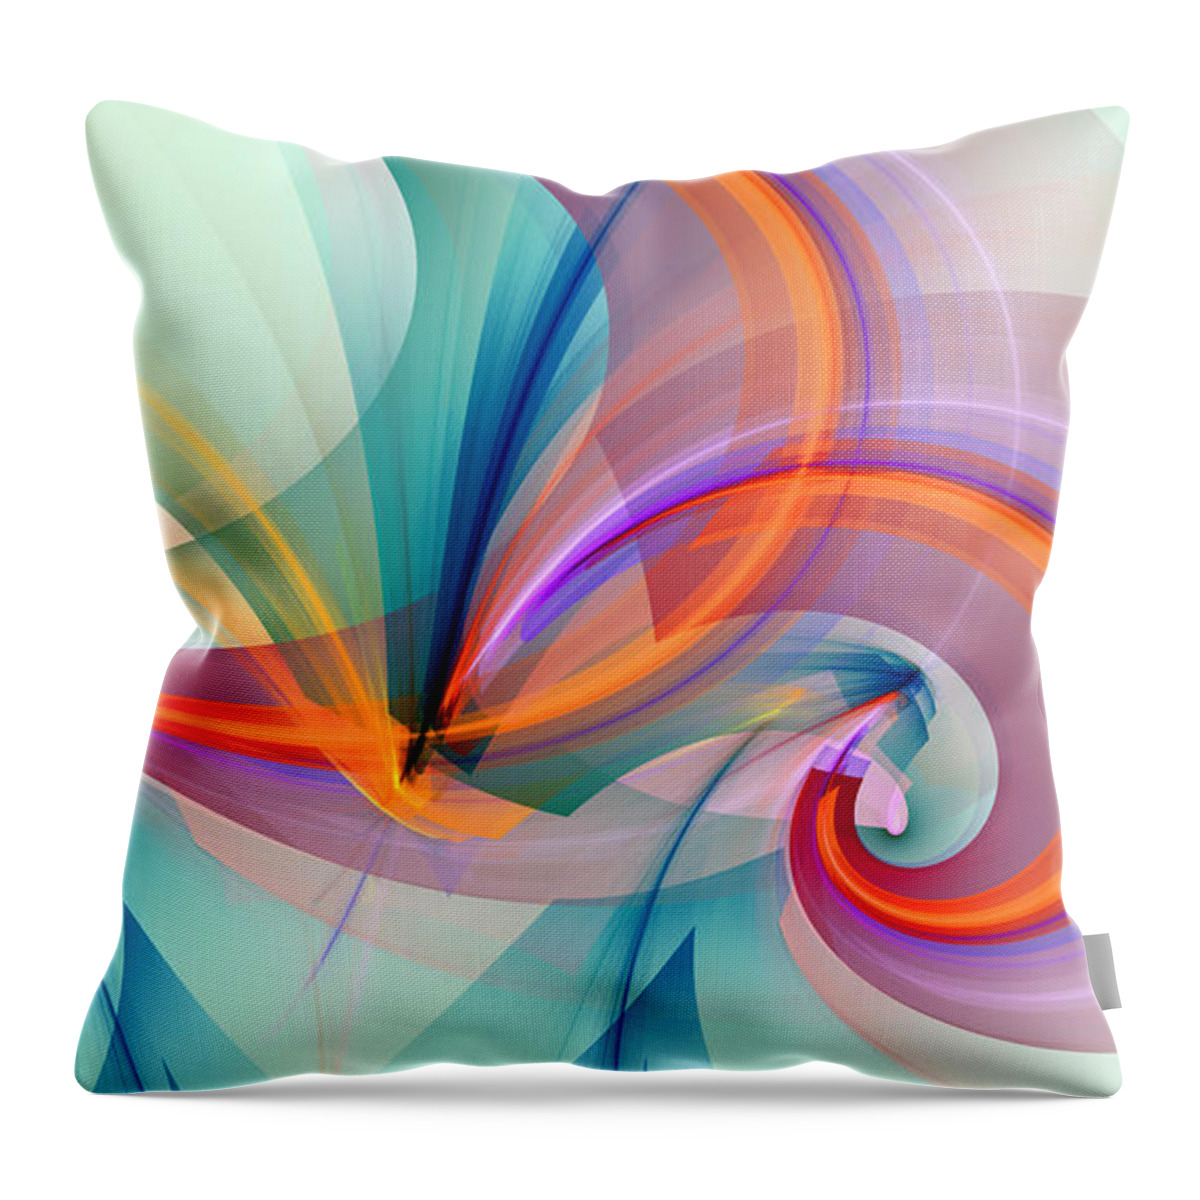 Abstract Art Throw Pillow featuring the digital art 1260 by Lar Matre